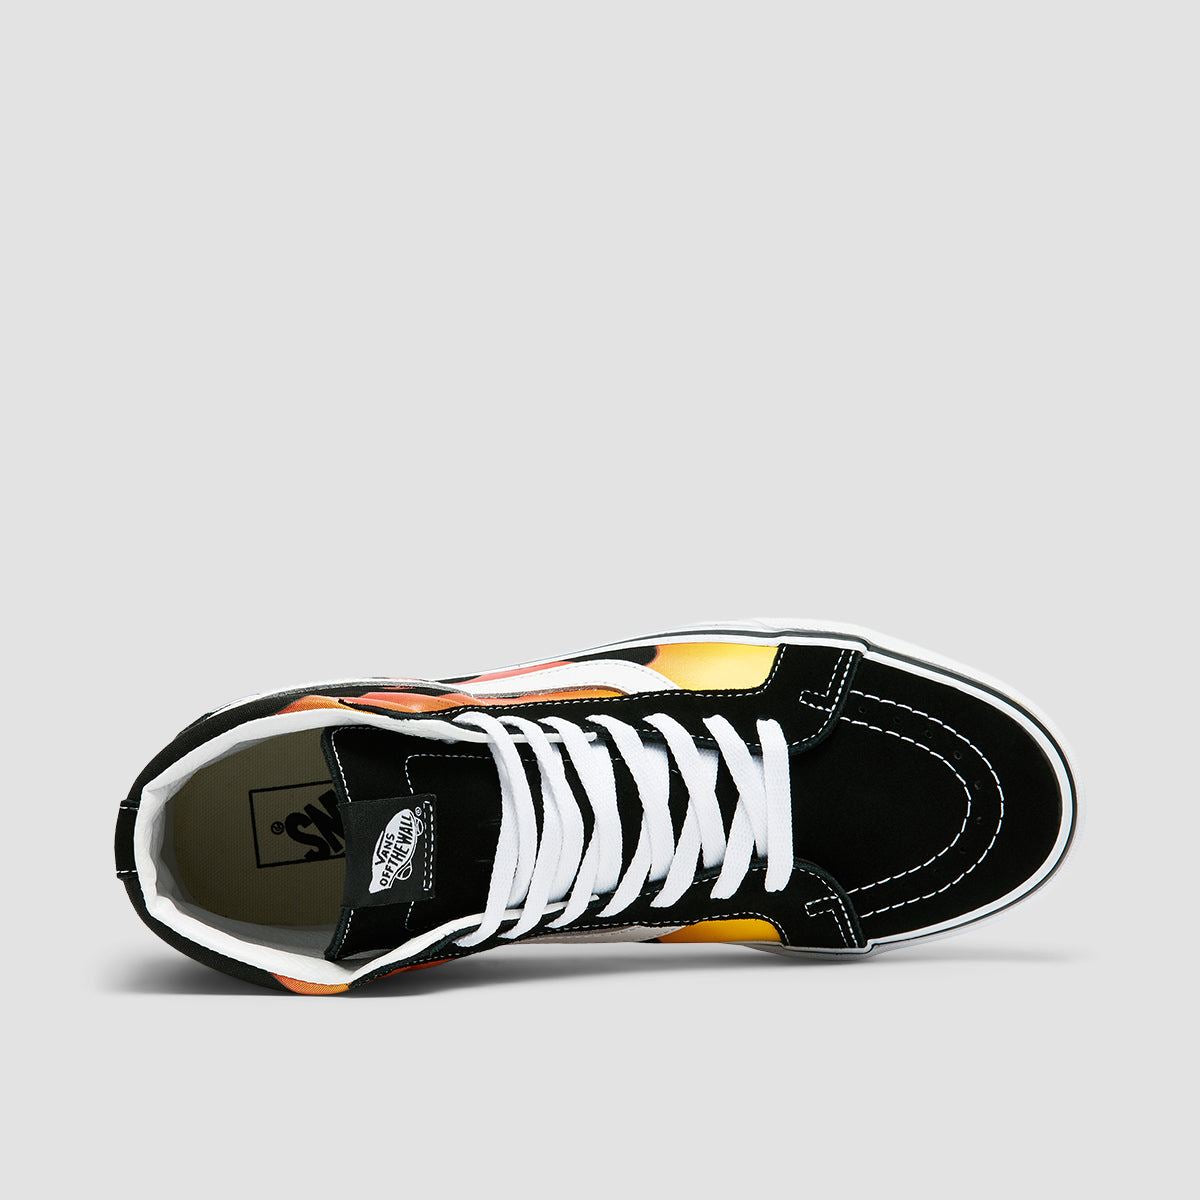 Vans SK8-Hi Reissue High Top Shoes - Flame Black/Black/True White